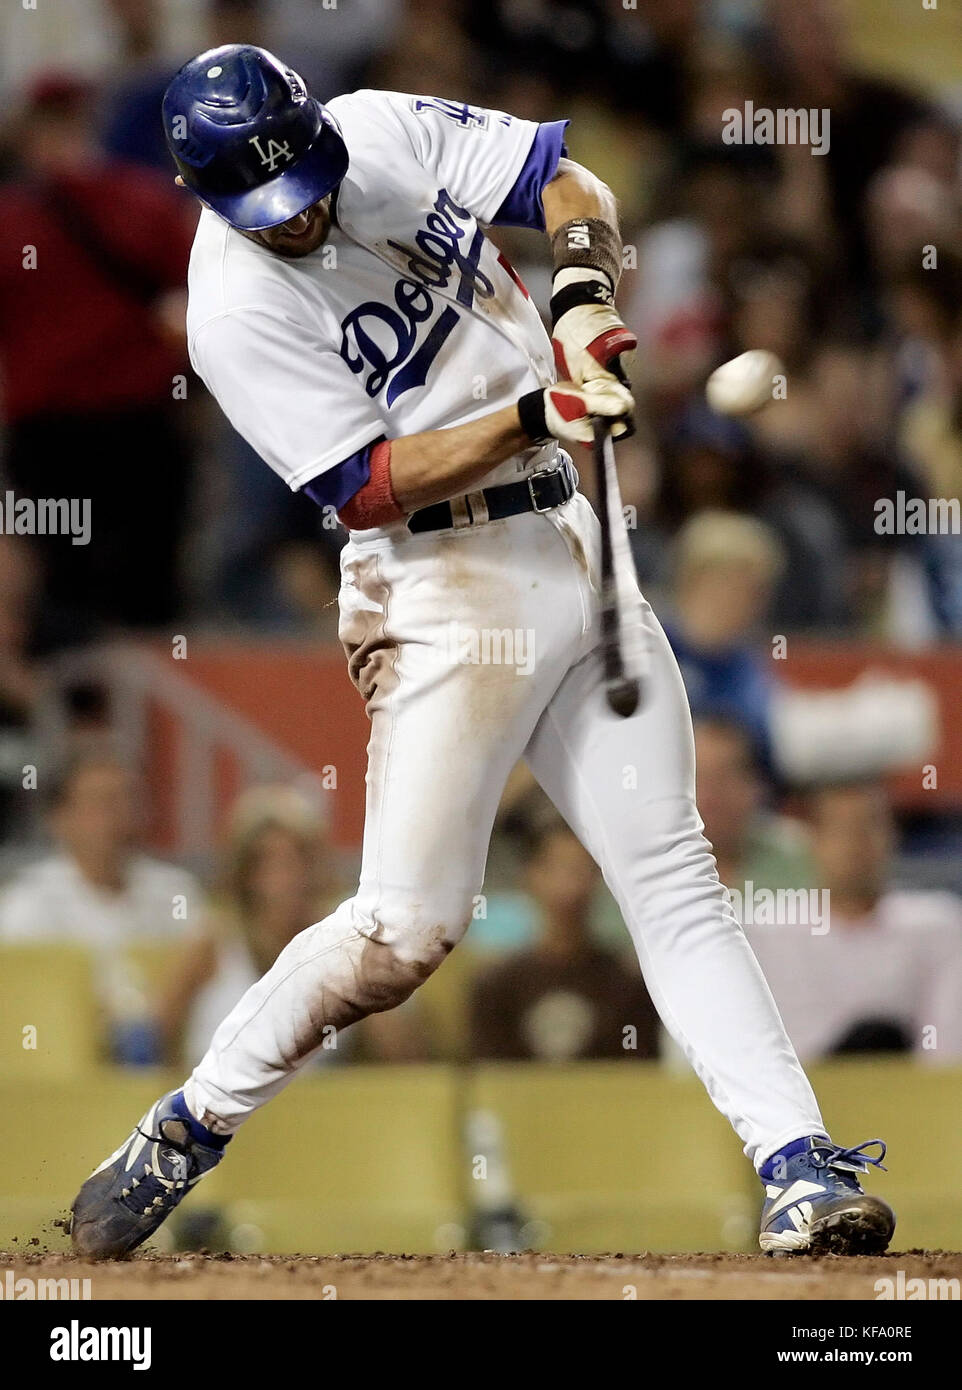 1,110 Dodgers Nomar Garciaparra Photos & High Res Pictures - Getty